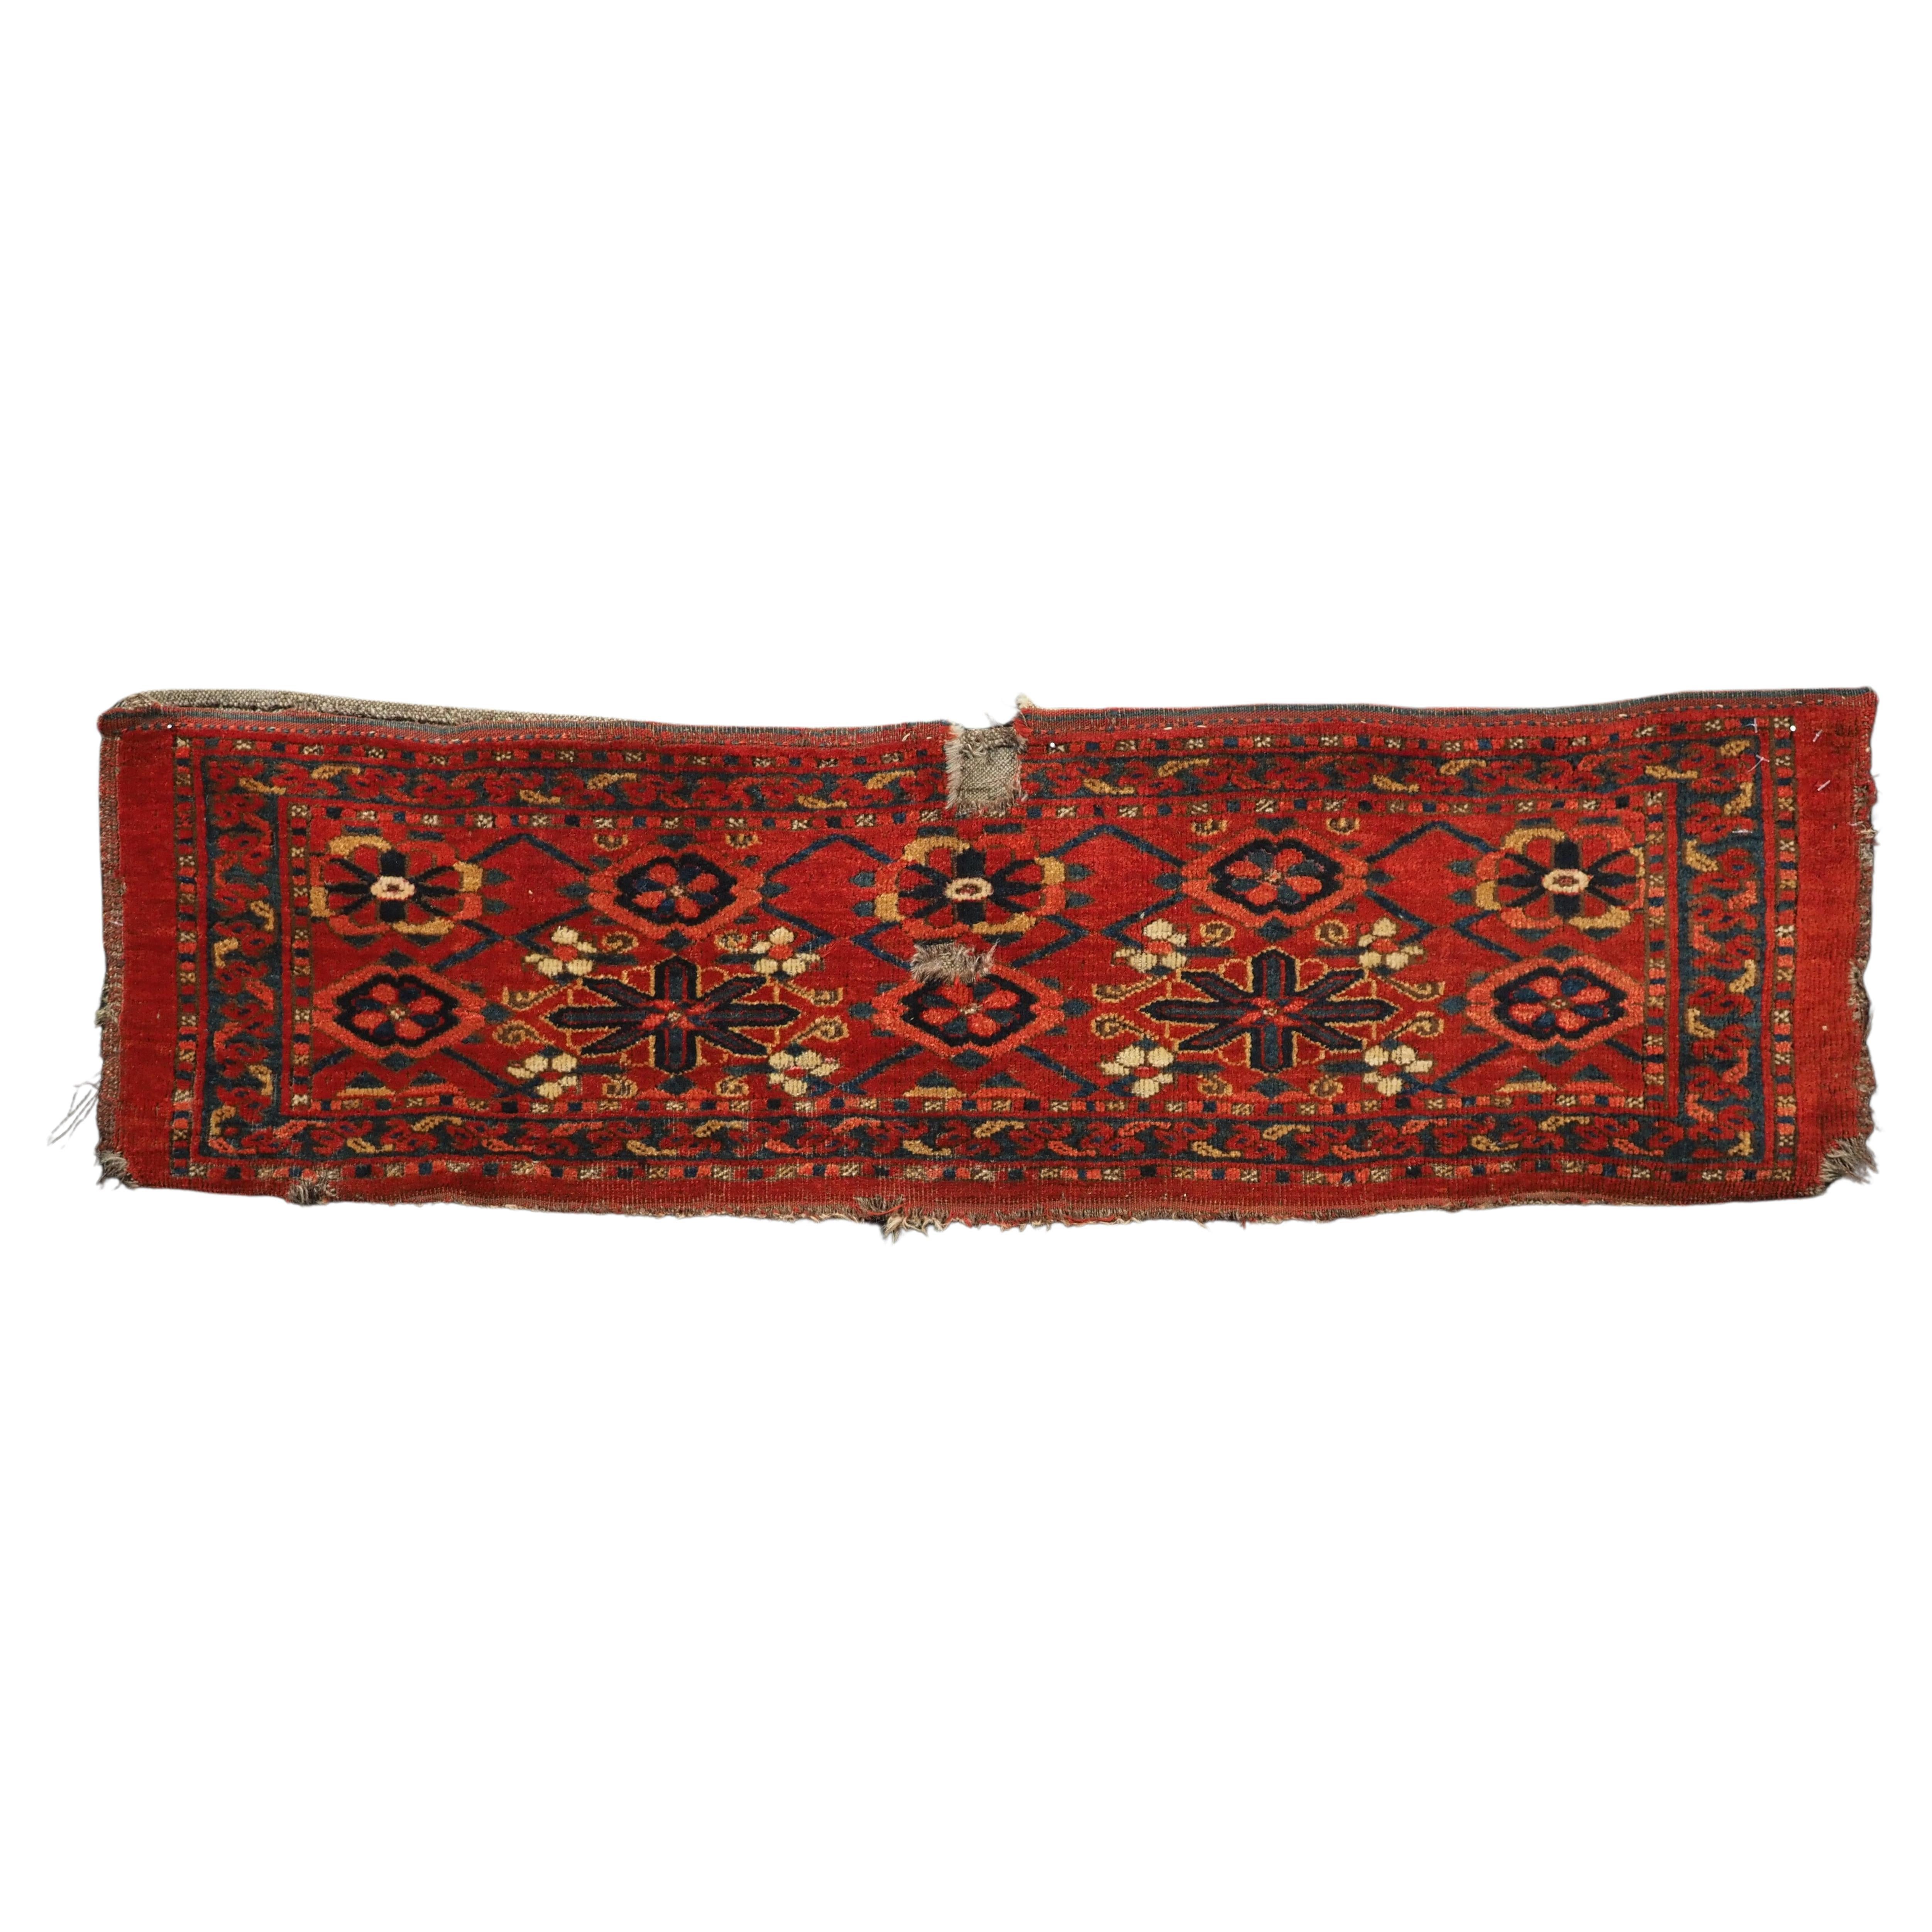 Antique Ersari Beshir Turkmen torba with mina khani design.  Circa 1870.